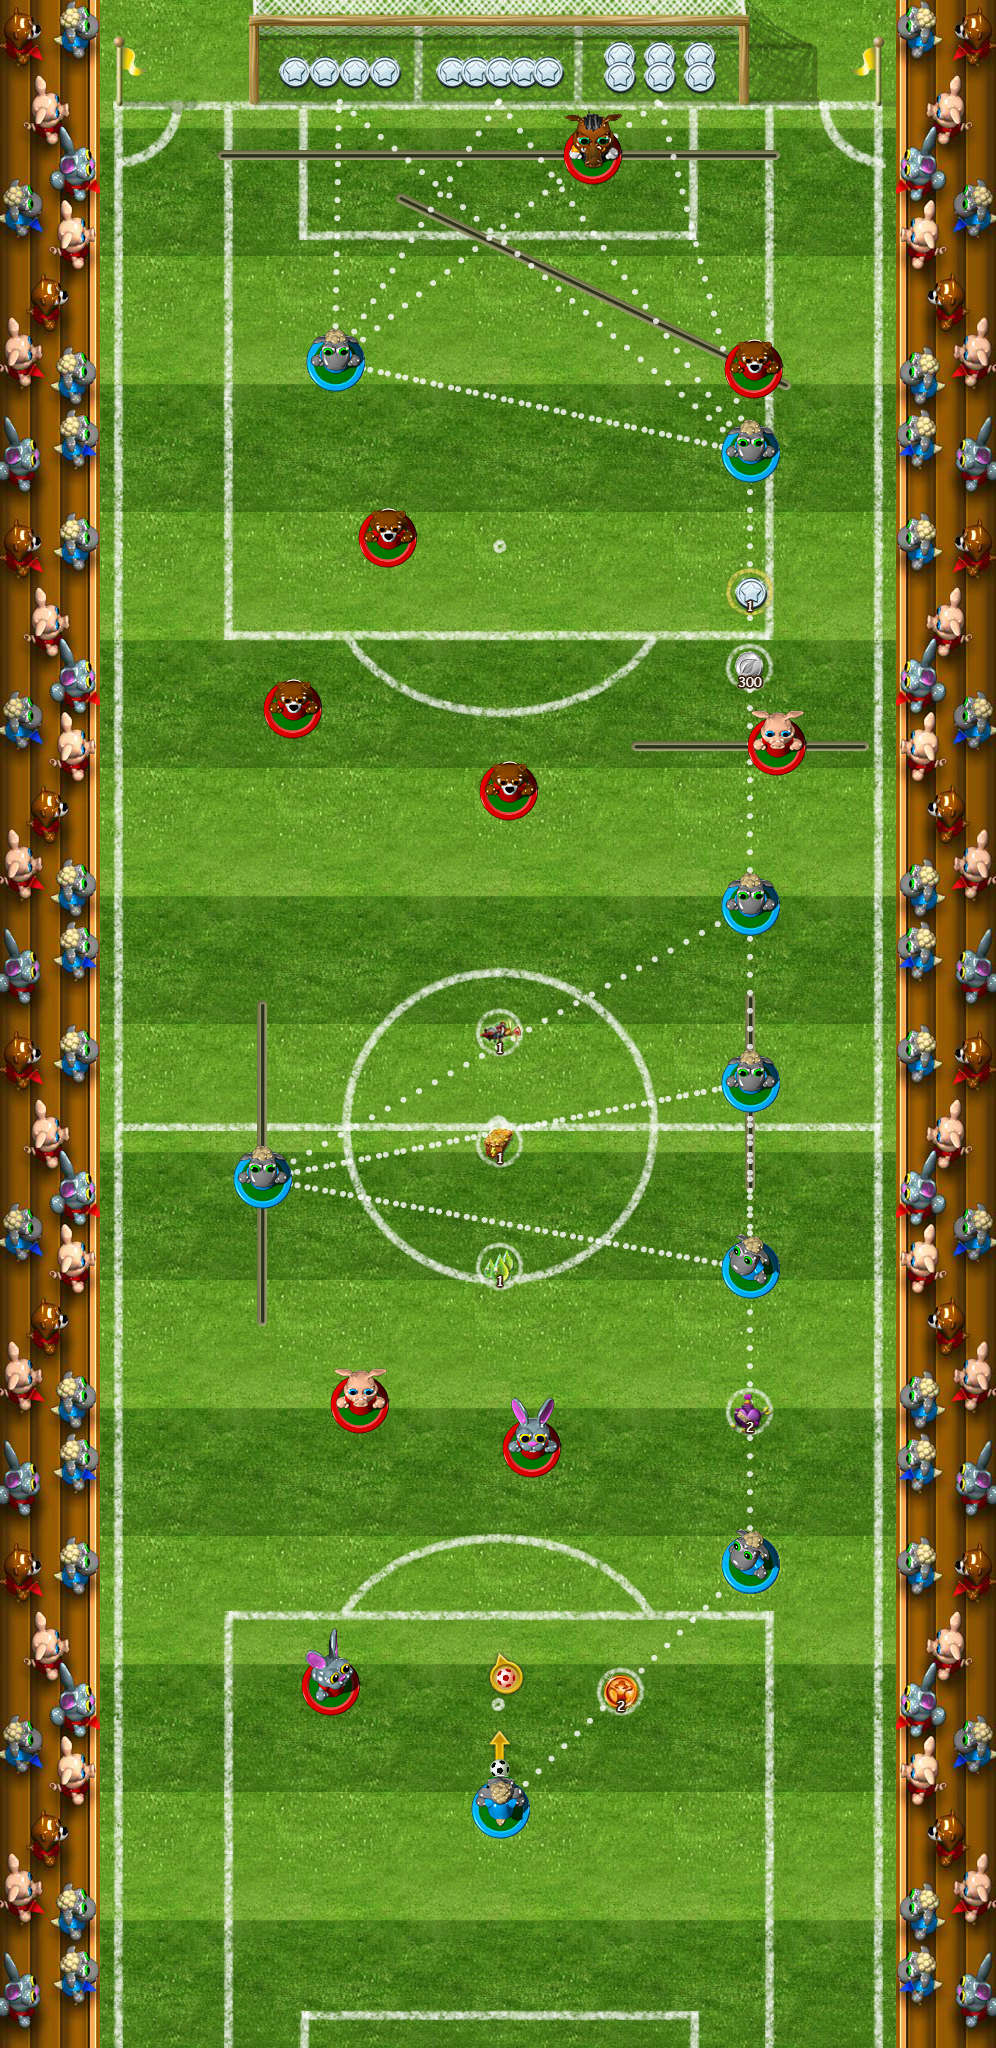 soccerjul2019_layout2.png